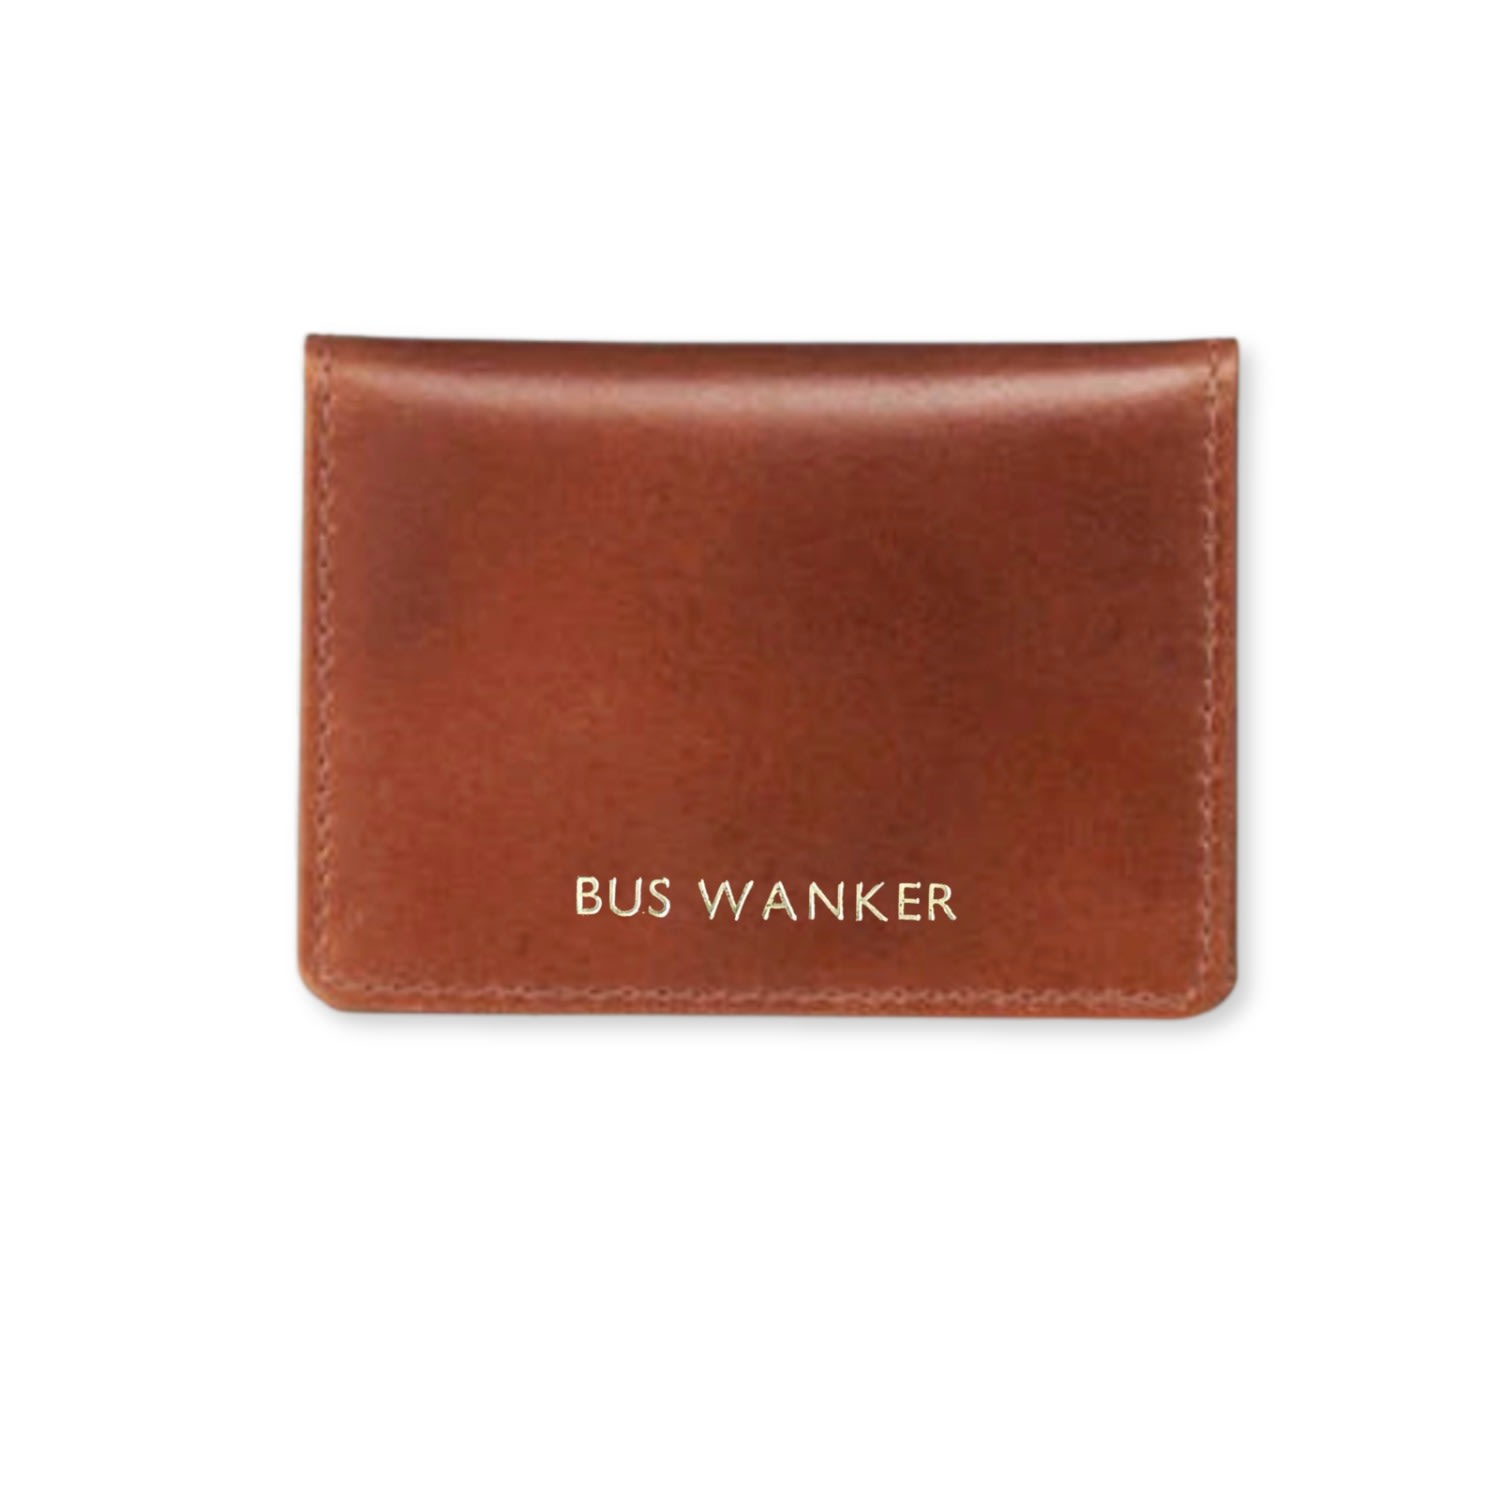 Vida Vida Men's Brown Tan Leather Card Holder - Bus Wanker